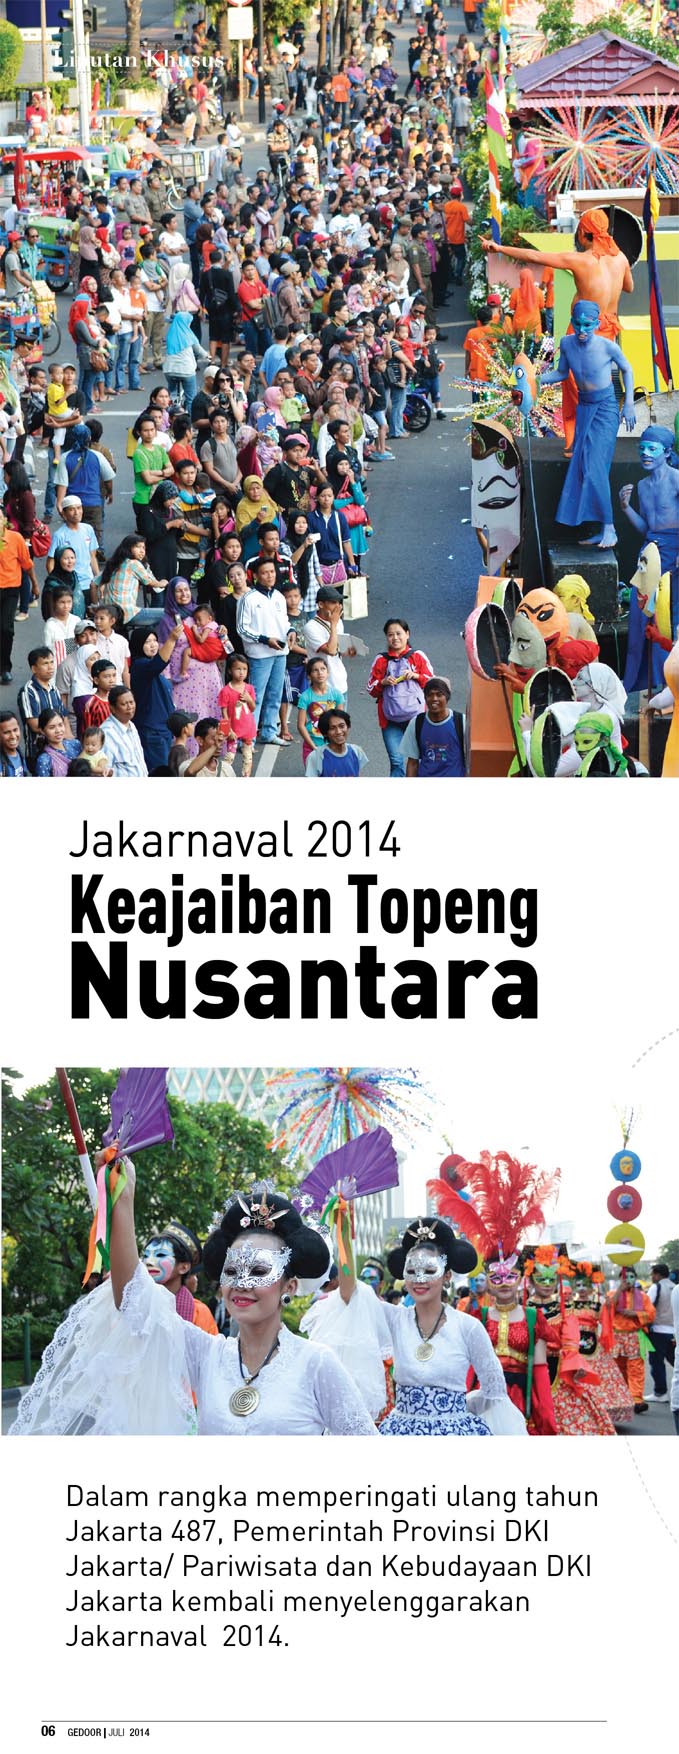 Jakarnaval 2014, Keajaiban Topeng Nusantara